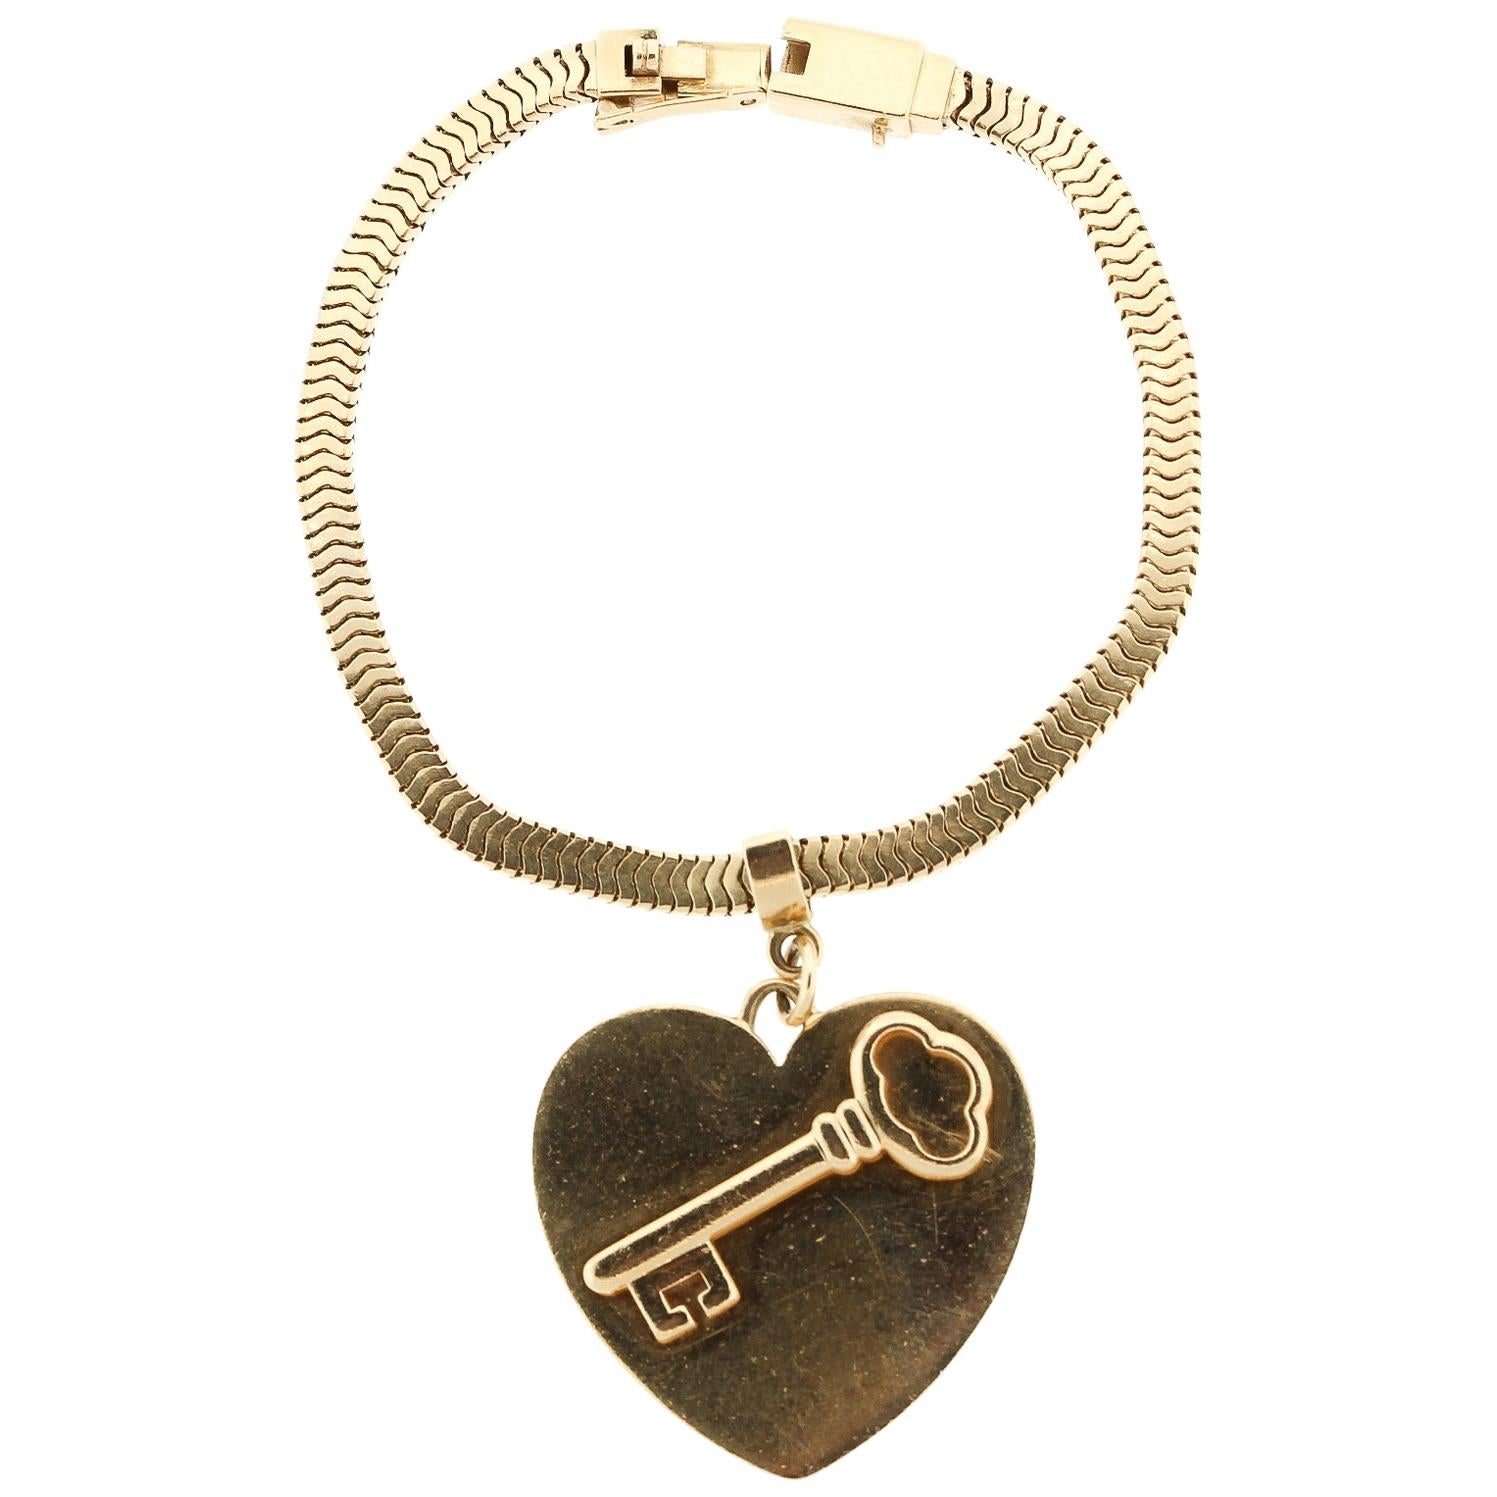 Vintage 1960s 14 Karat Gold Heart Charm Bracelet by Tiffany & Co.